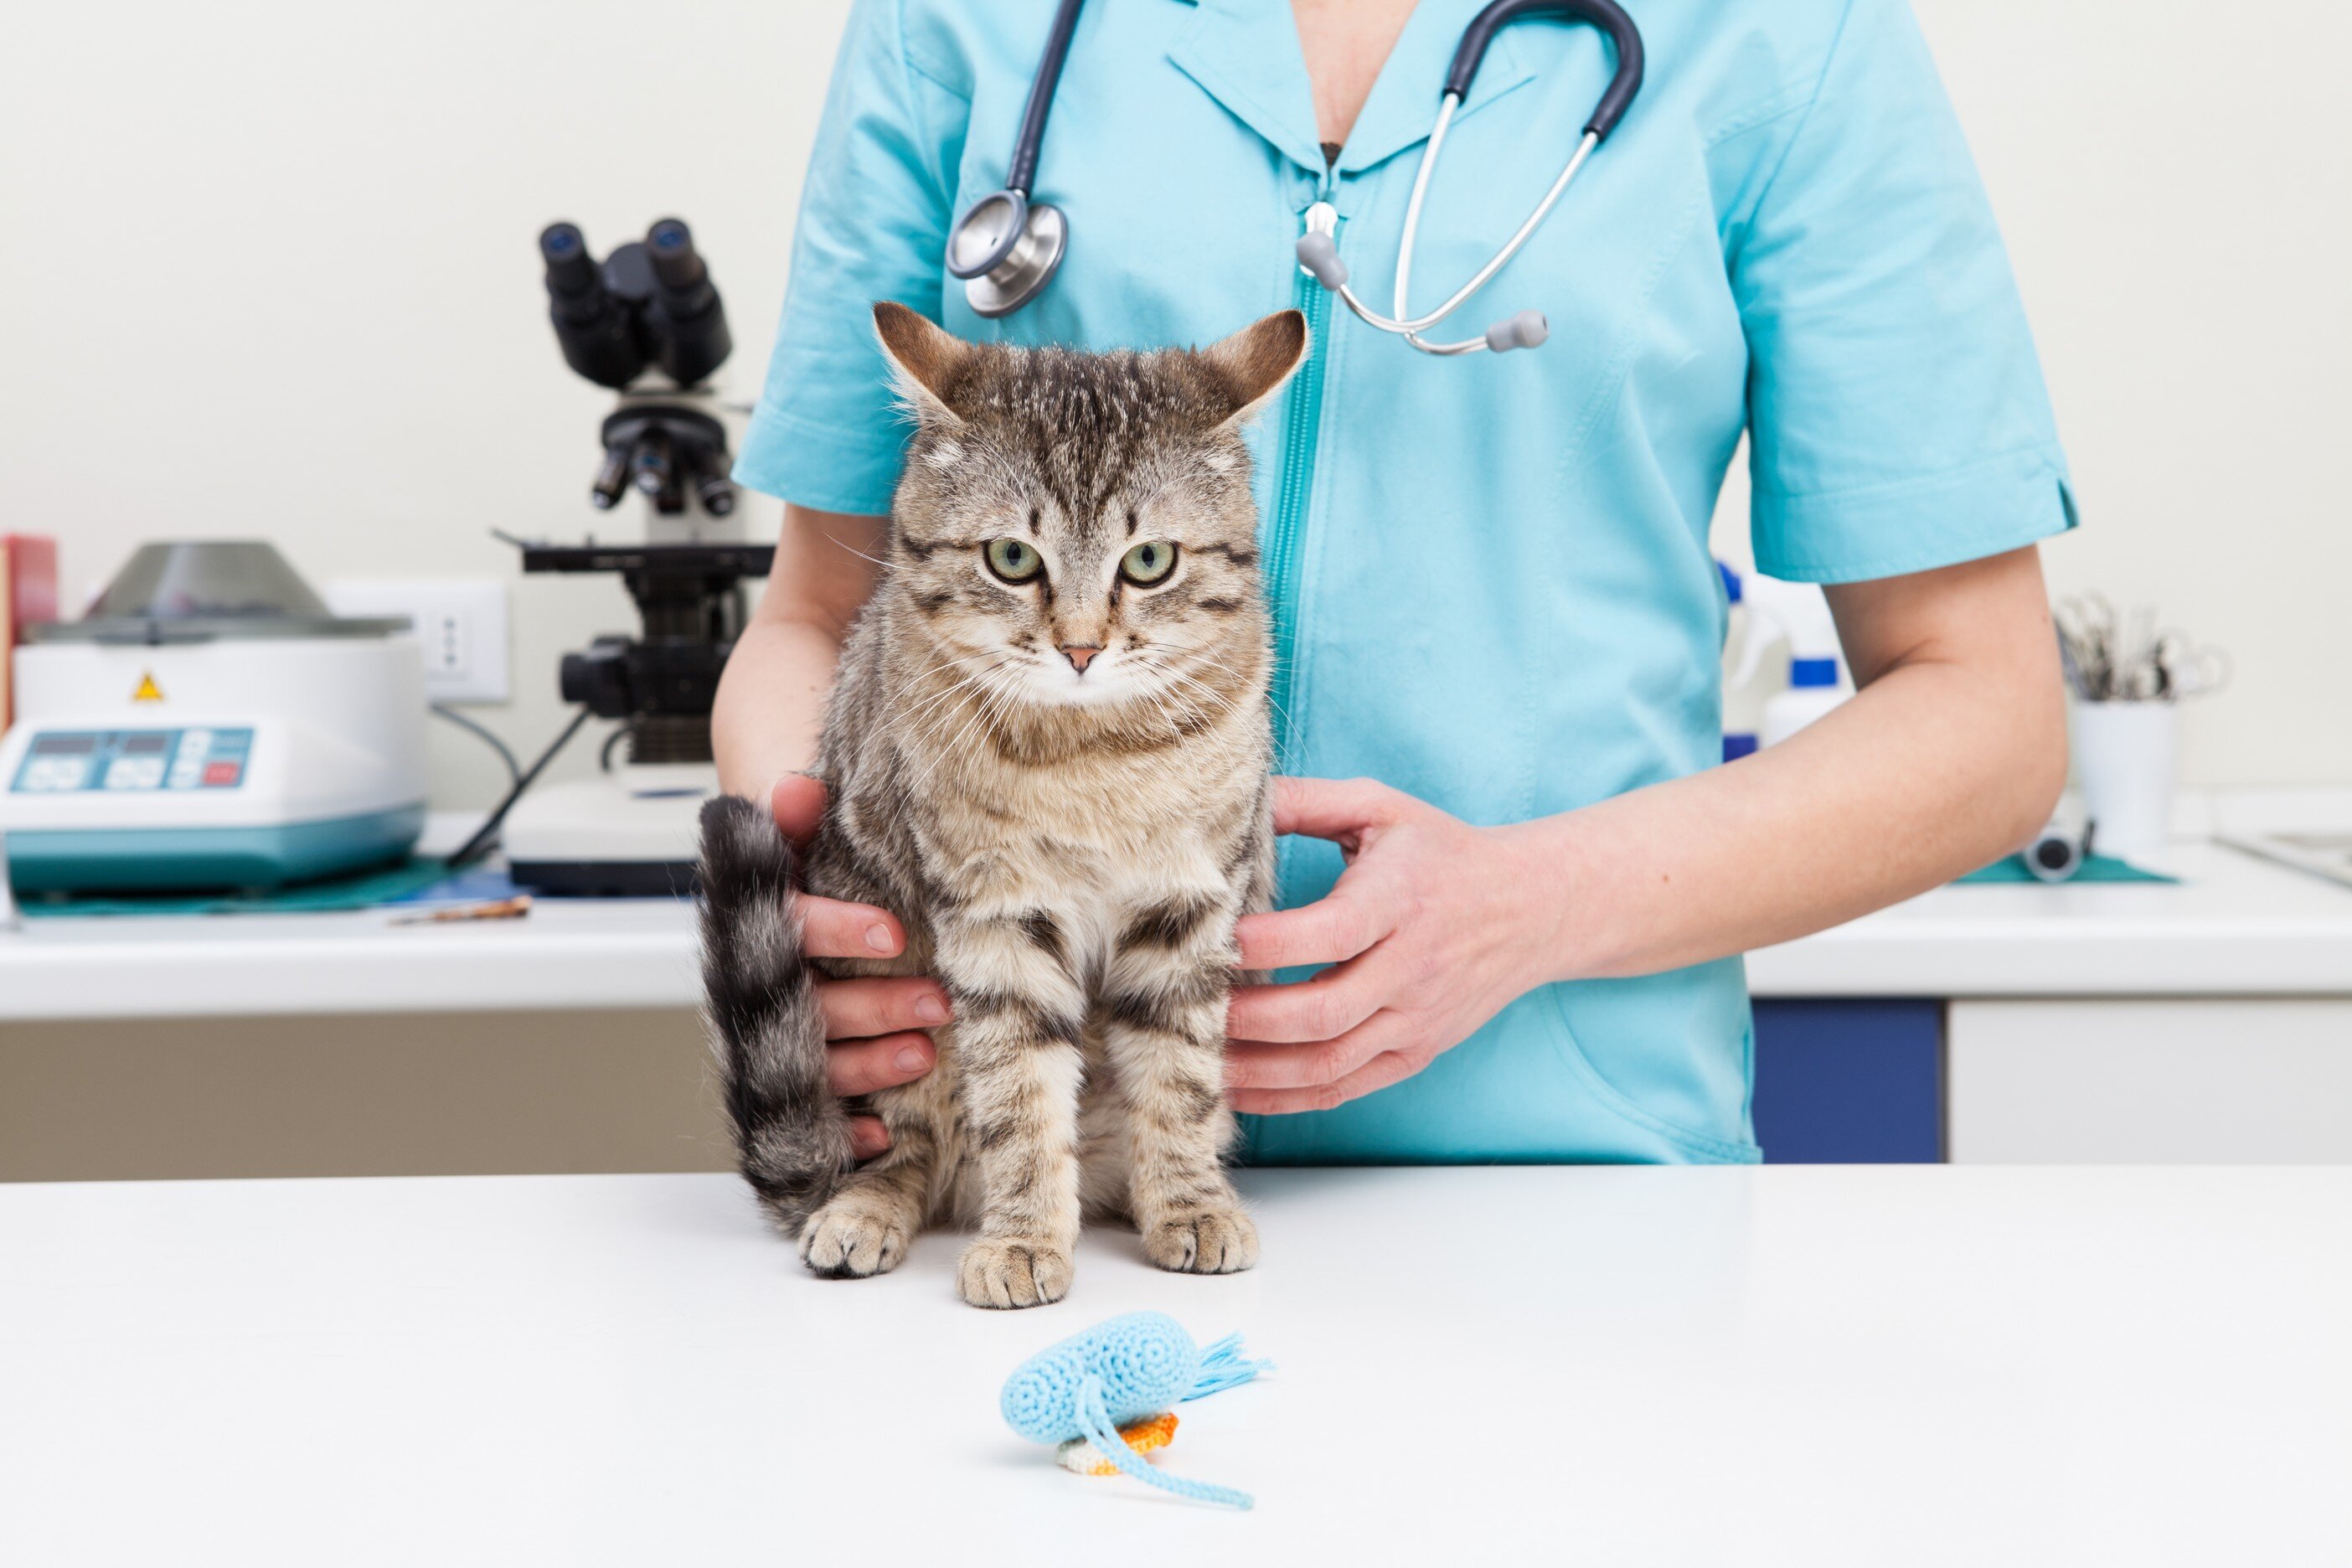 veteriner masasında oturan kedi